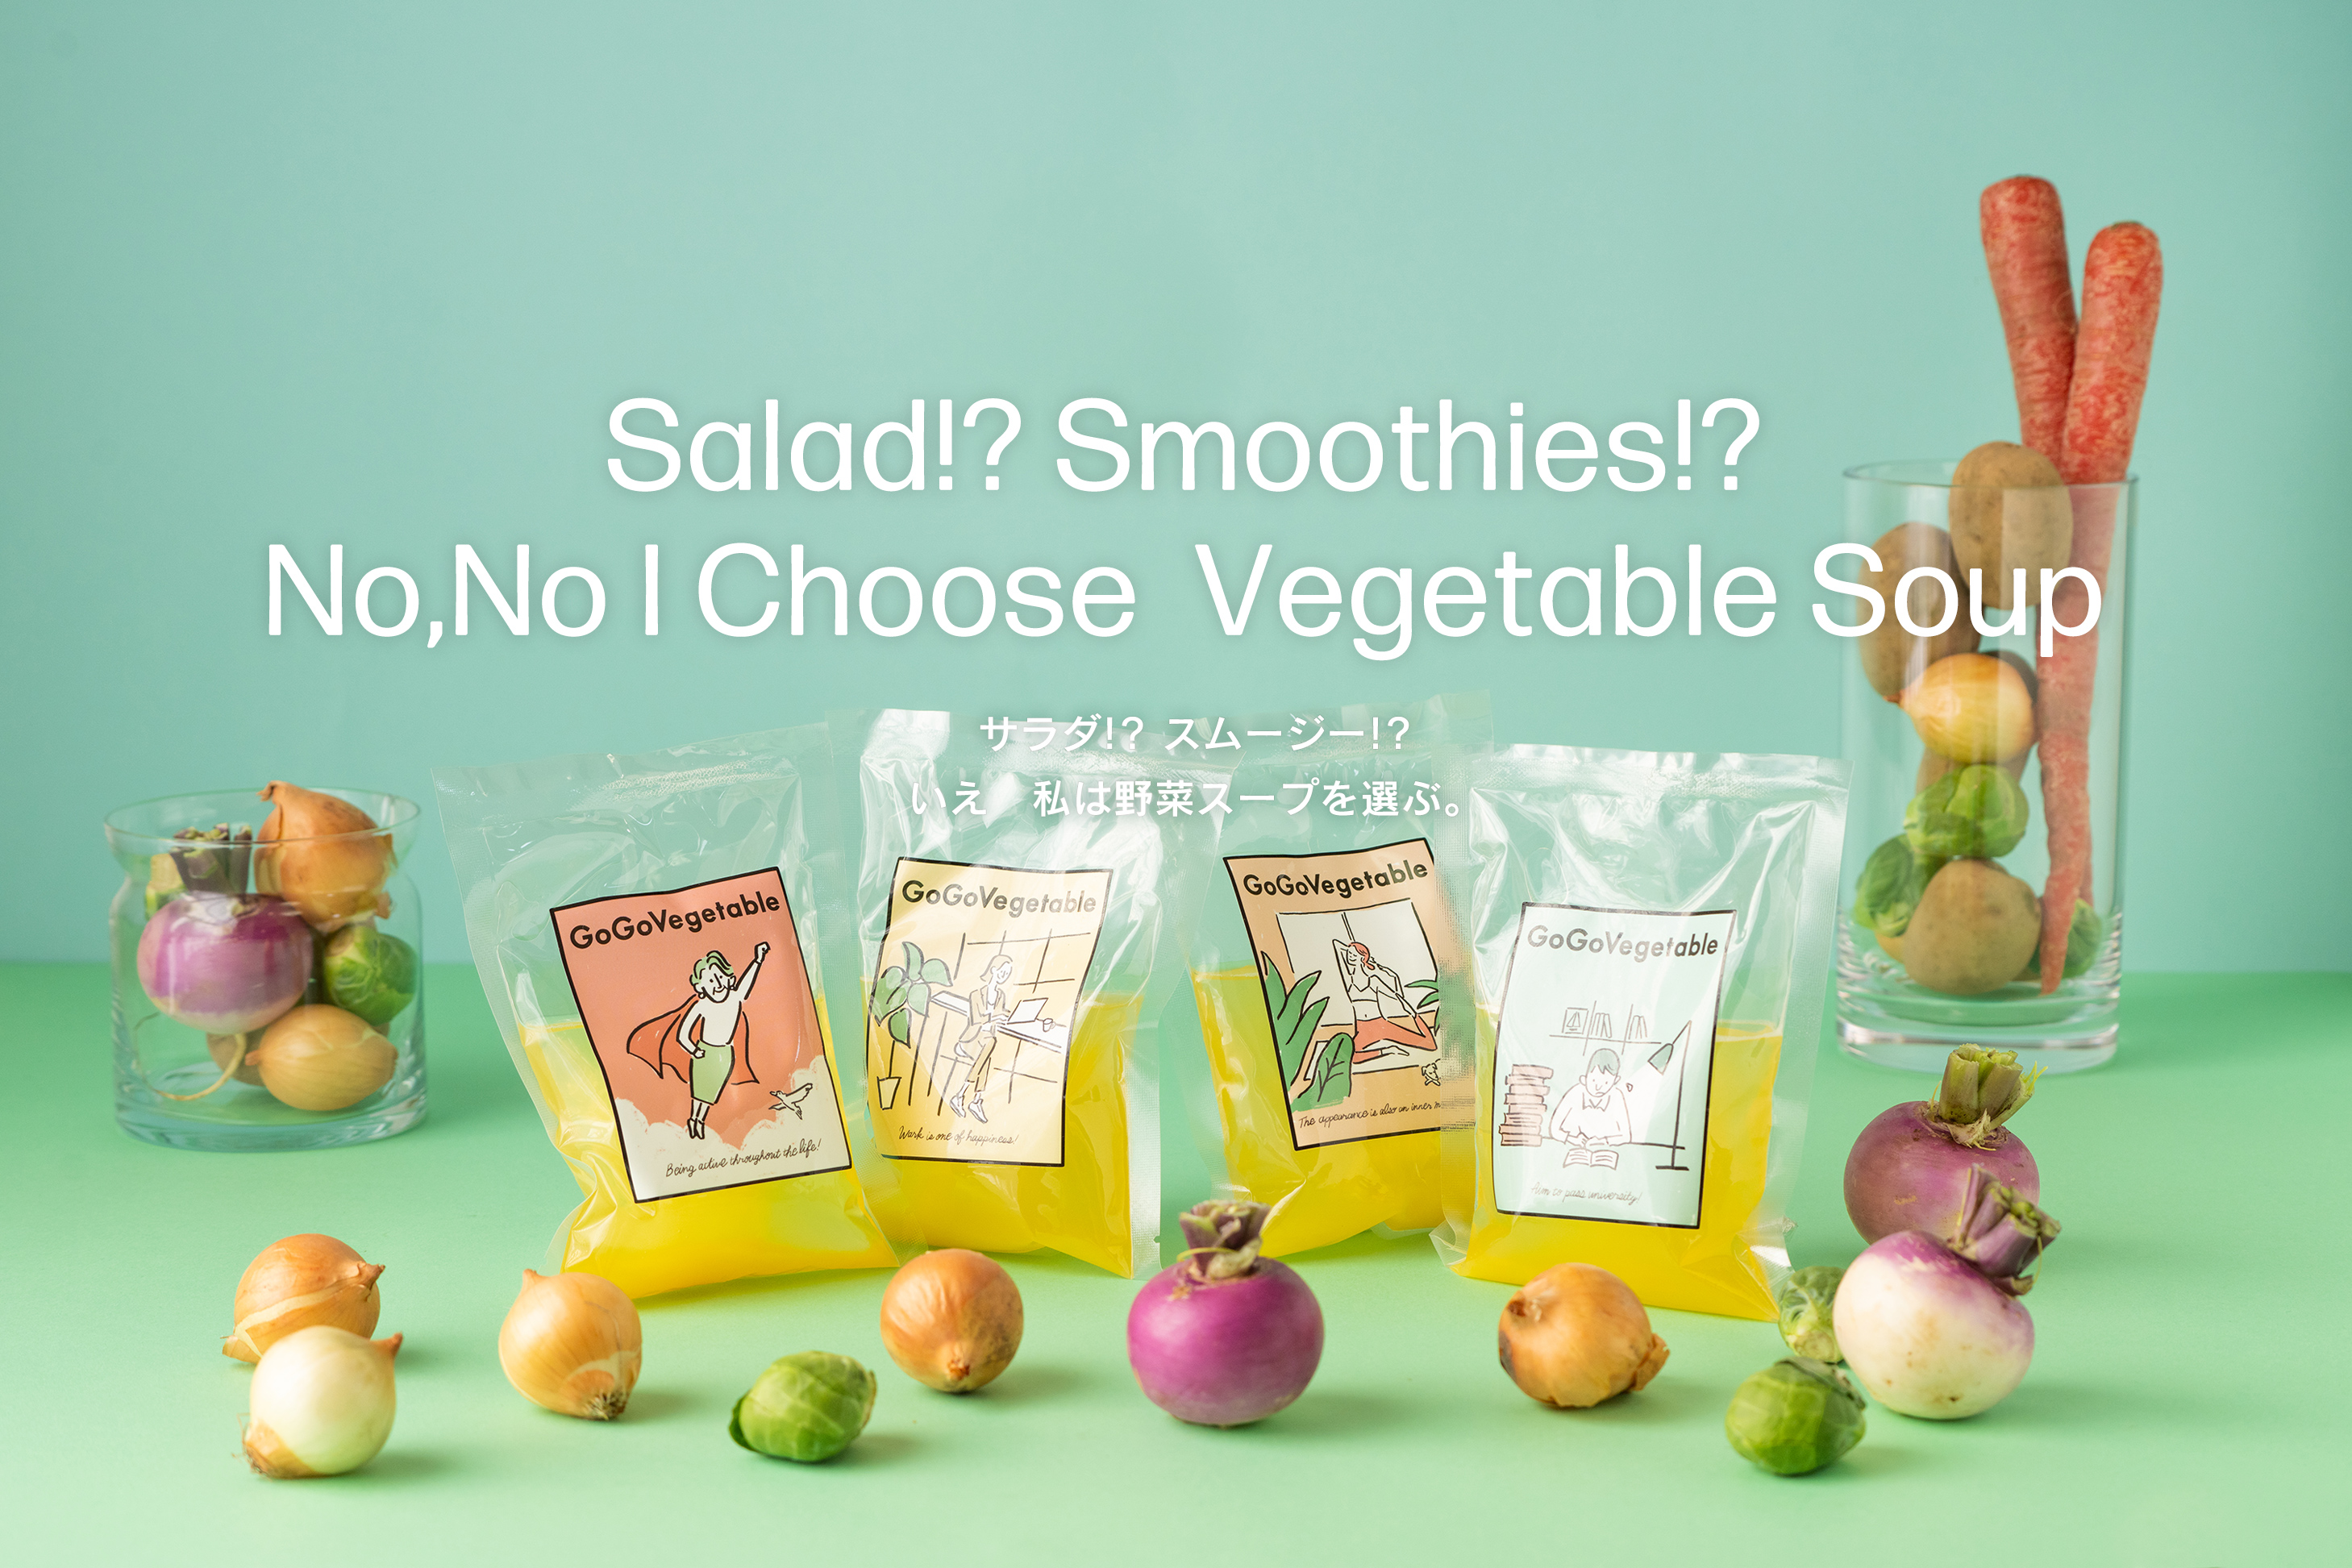 Salad!? Smoothies!? No No I Choose Vegetable Soup